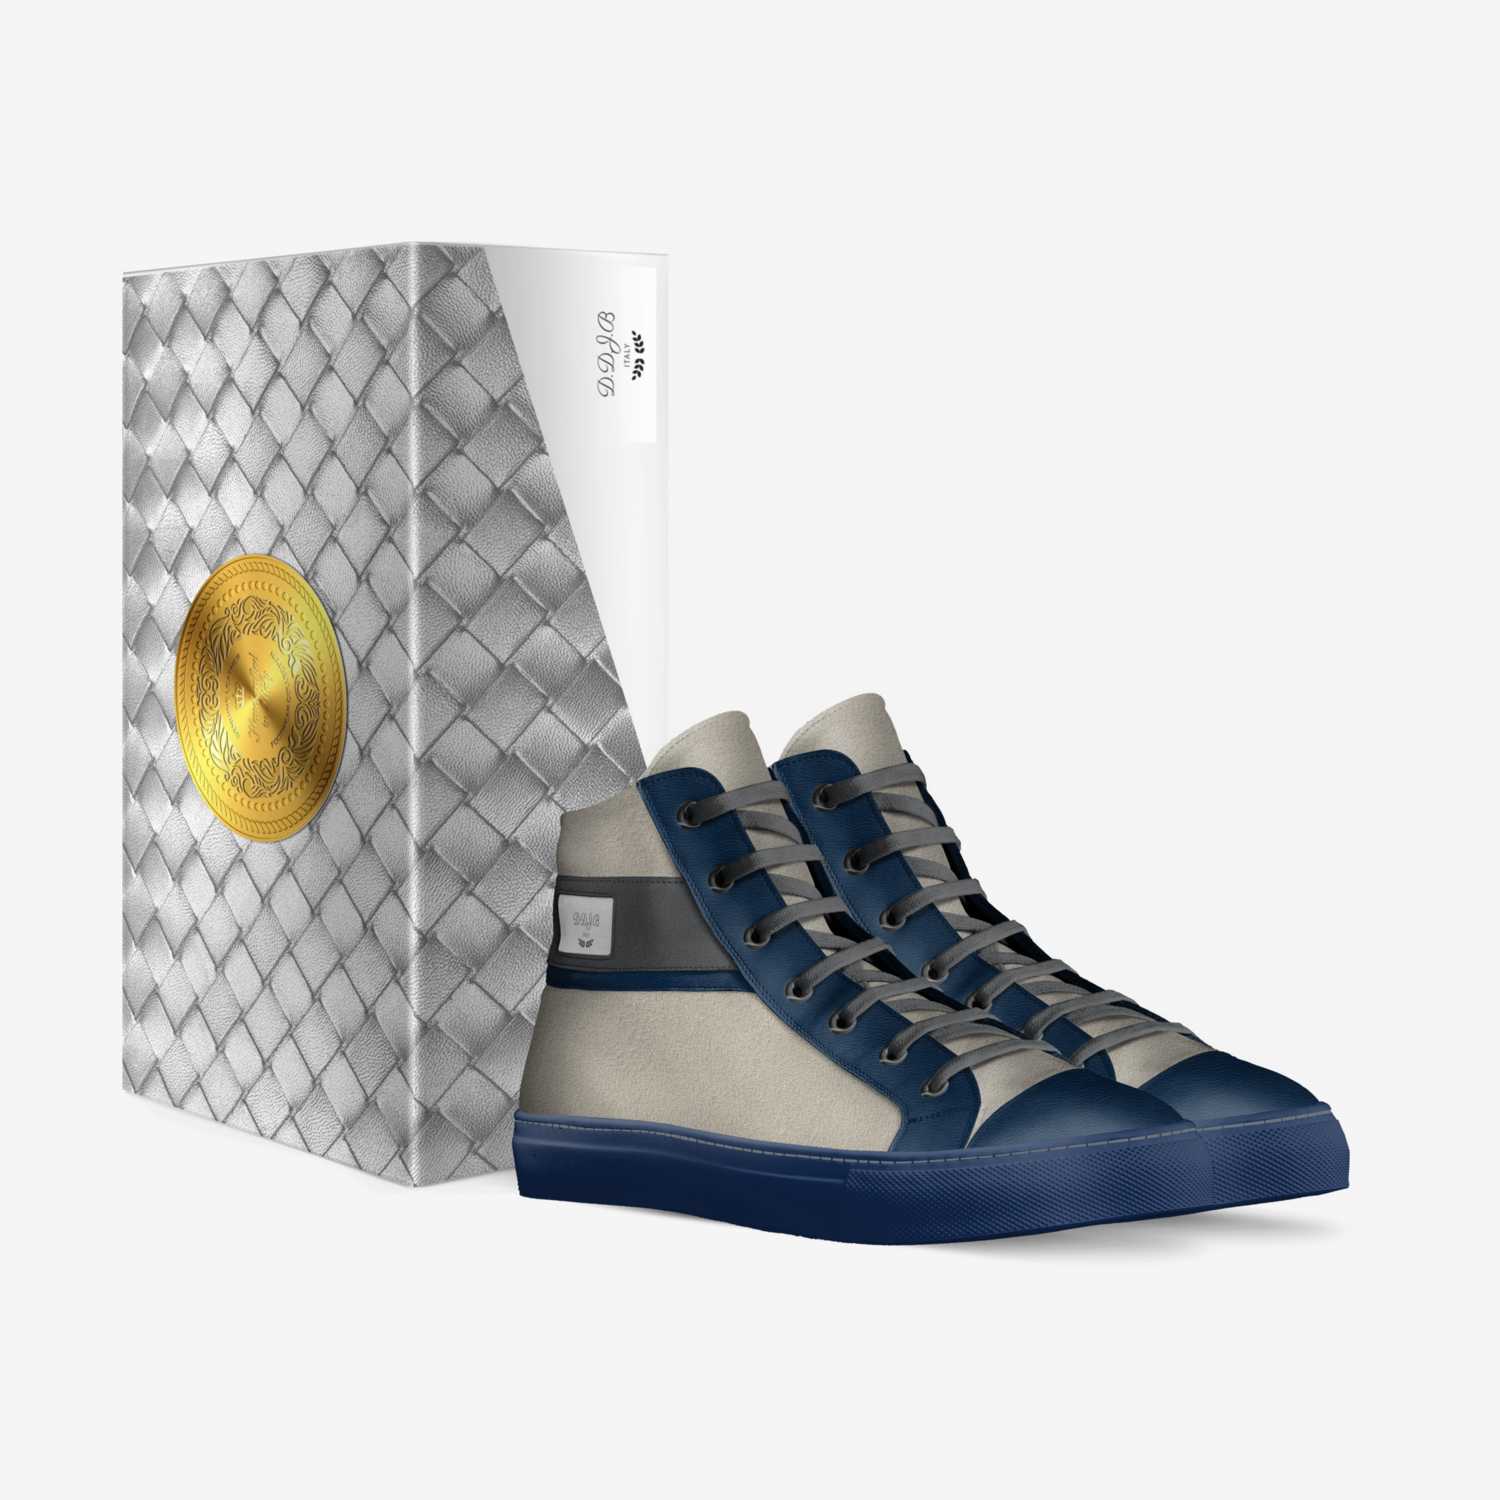 B.L.F custom made in Italy shoes by Prentiss Jones Jr | Box view